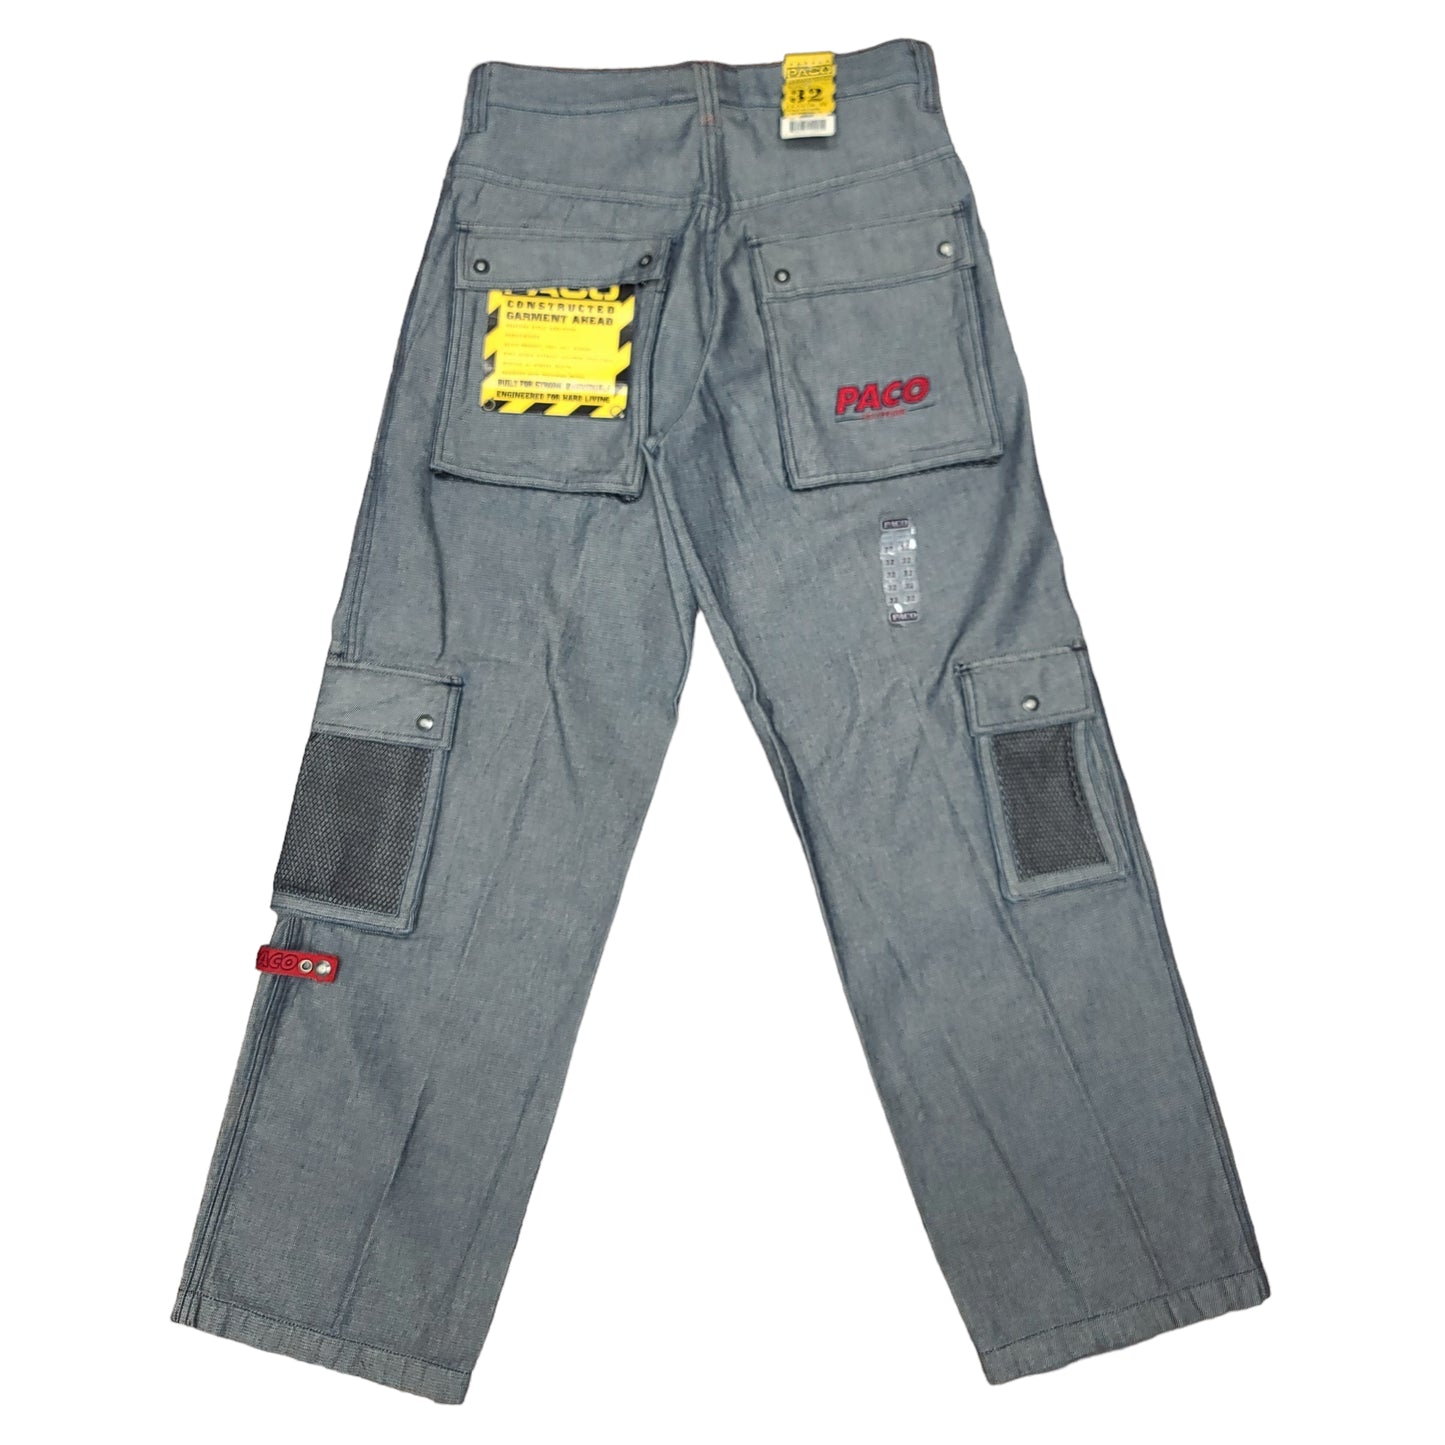 Vintage Y2K Utility Cargo Denim Paco Jeans